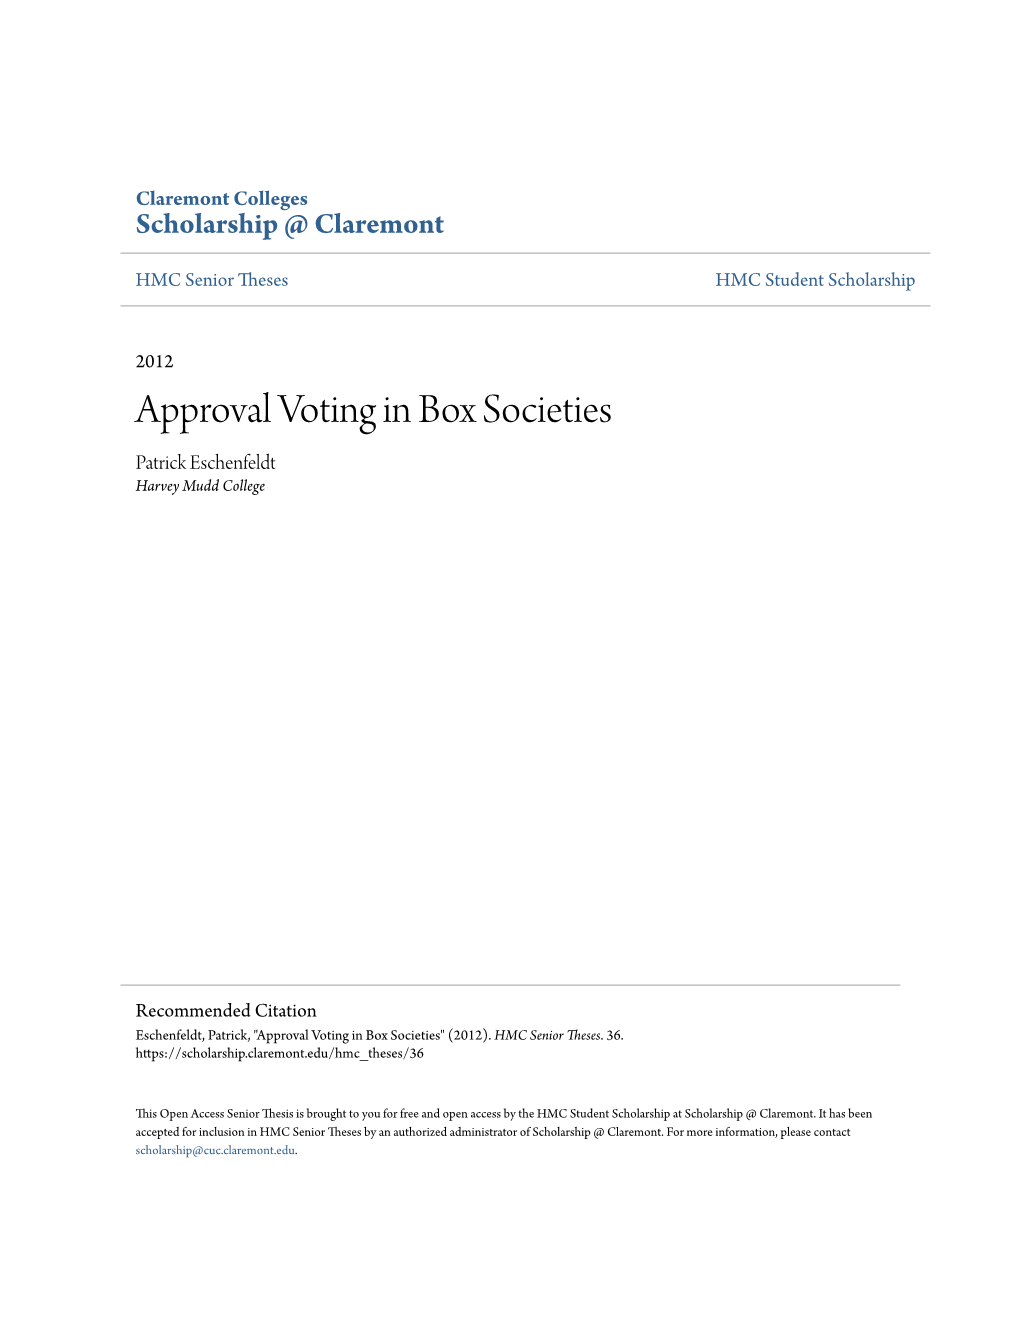 Approval Voting in Box Societies Patrick Eschenfeldt Harvey Mudd College